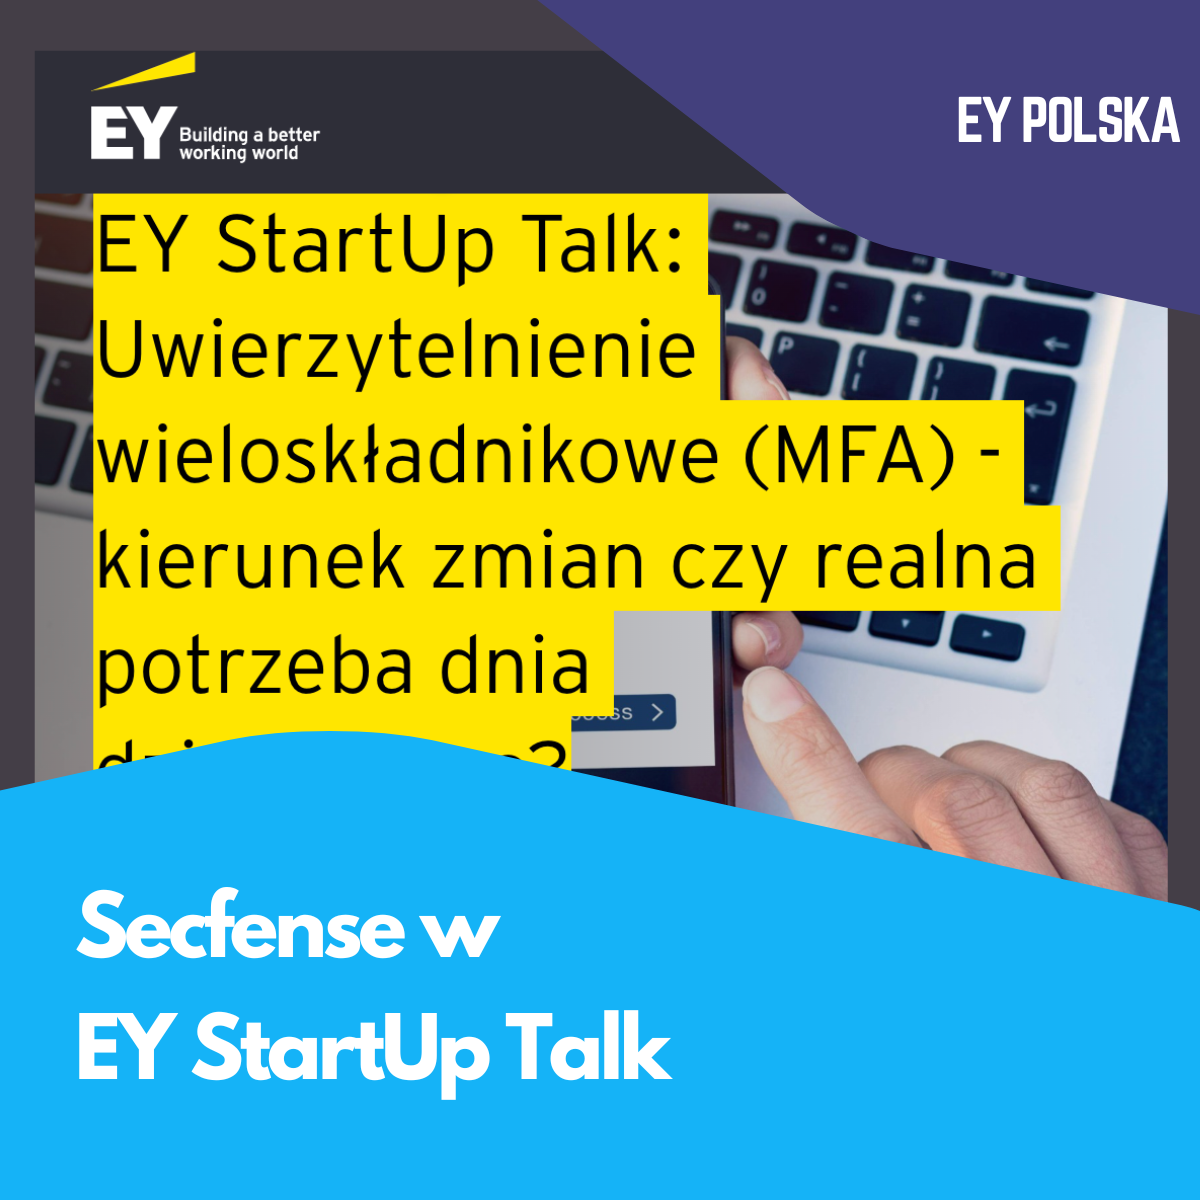 Secfense w EY StartUp Talk